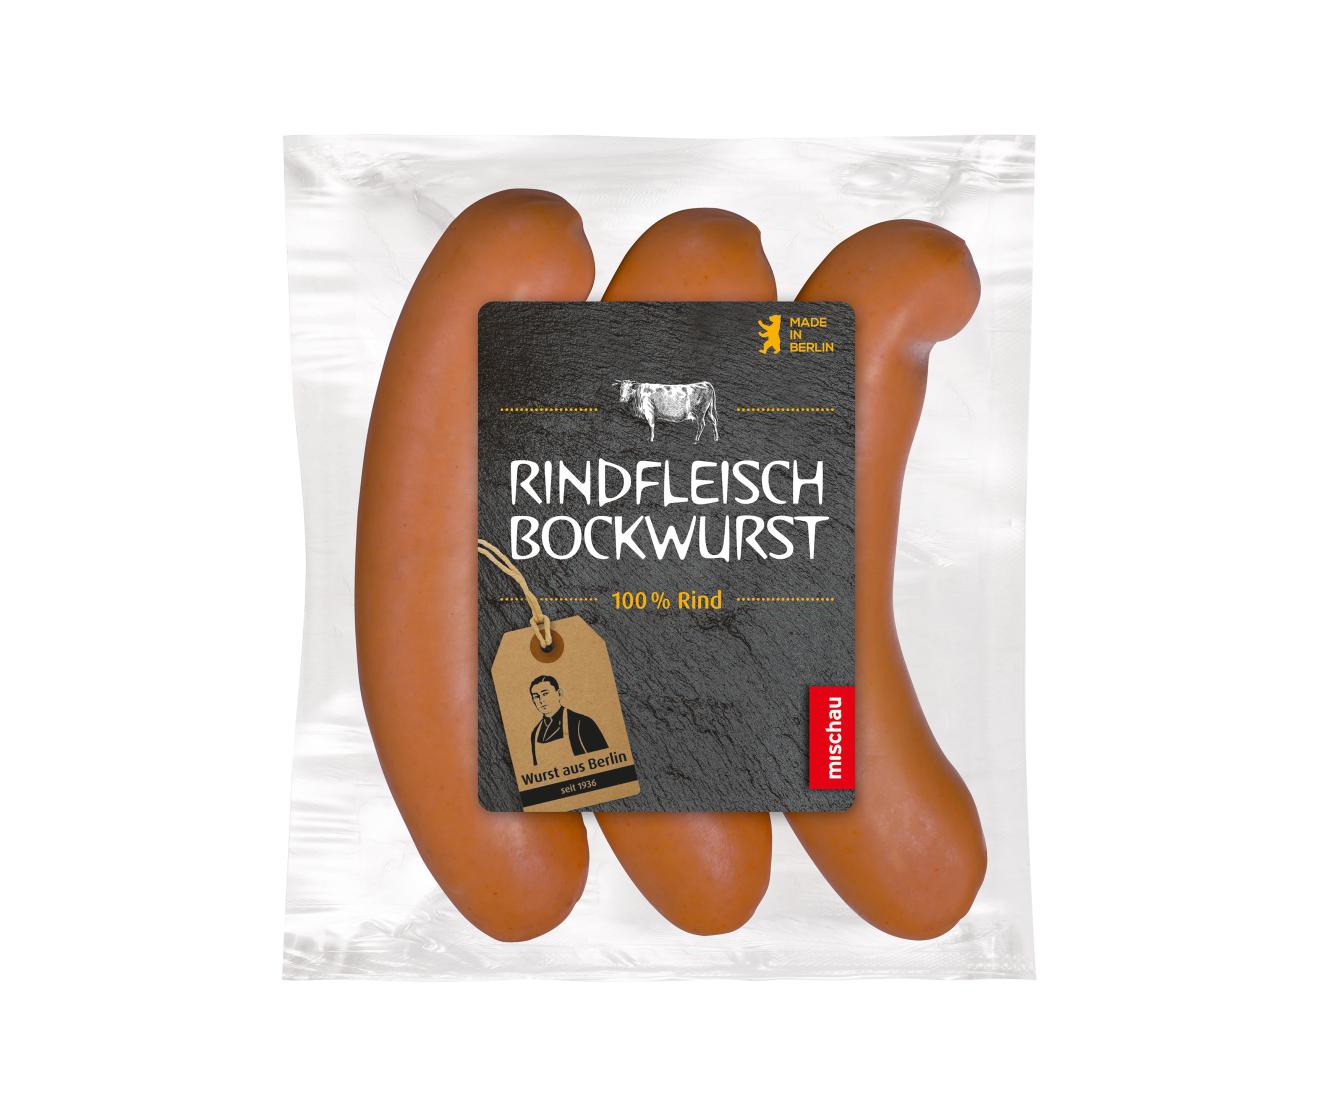 Rindfleisch Bockwurst 3 × 85 g